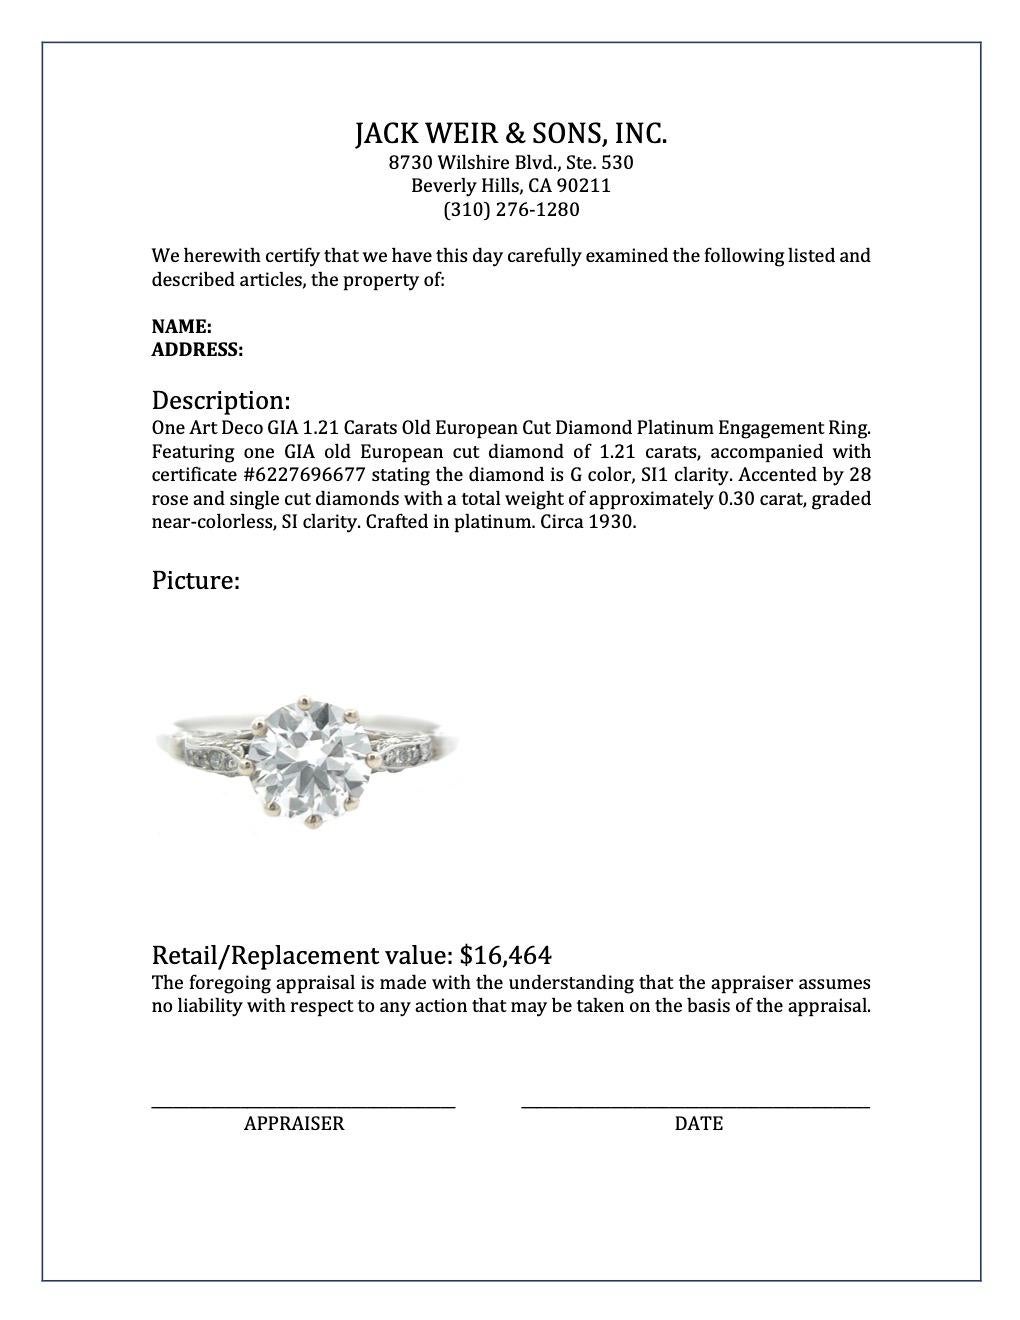 Art Deco GIA 1.21 Carats Old European Cut Diamond Platinum Engagement Ring 4